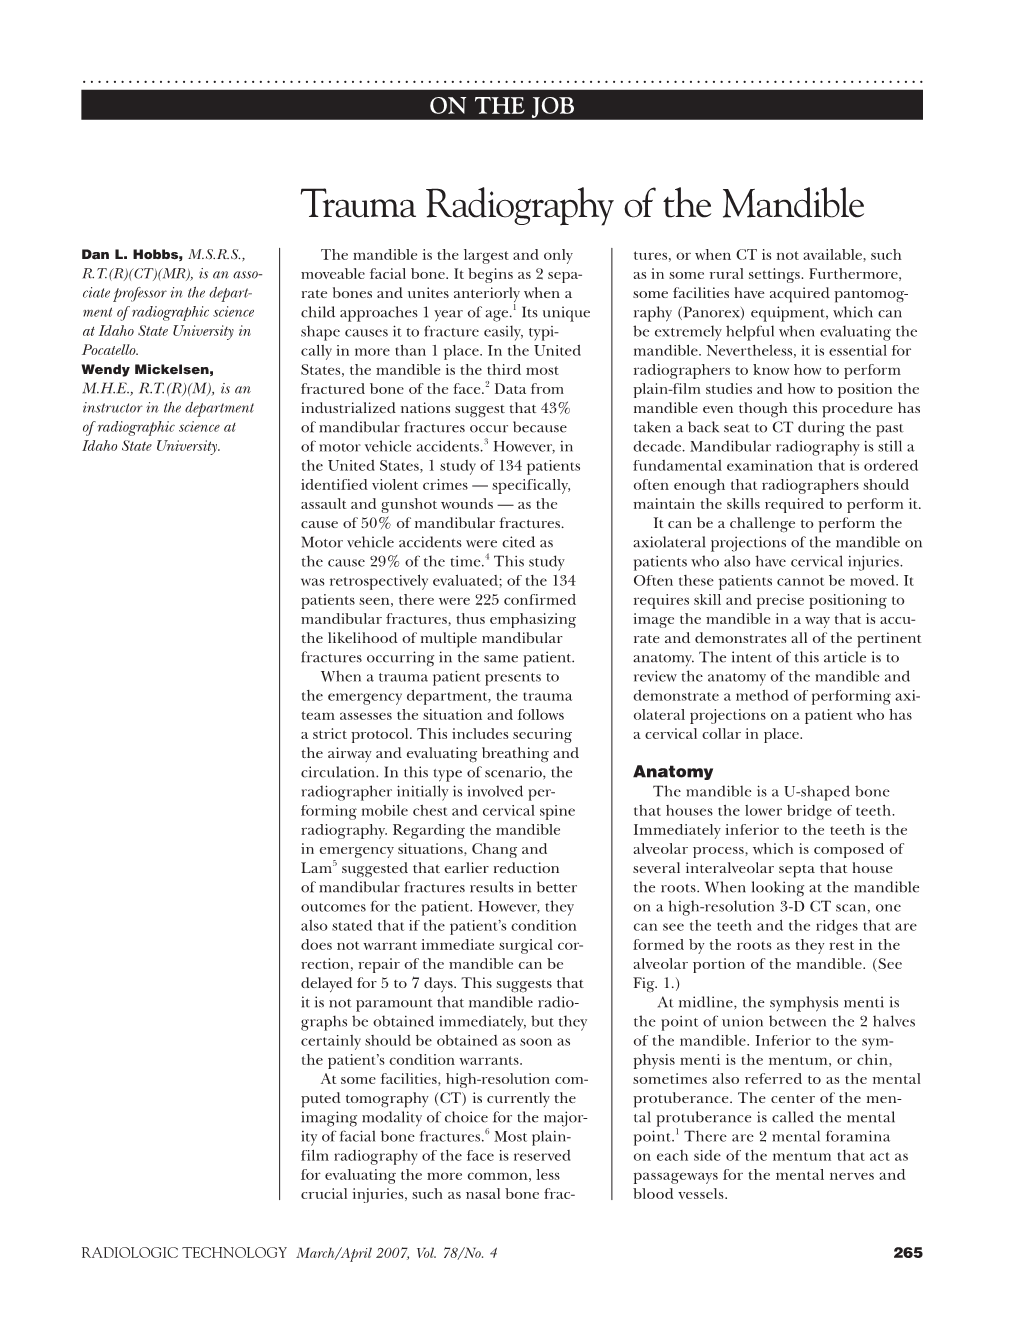 Trauma Radiography of the Mandible